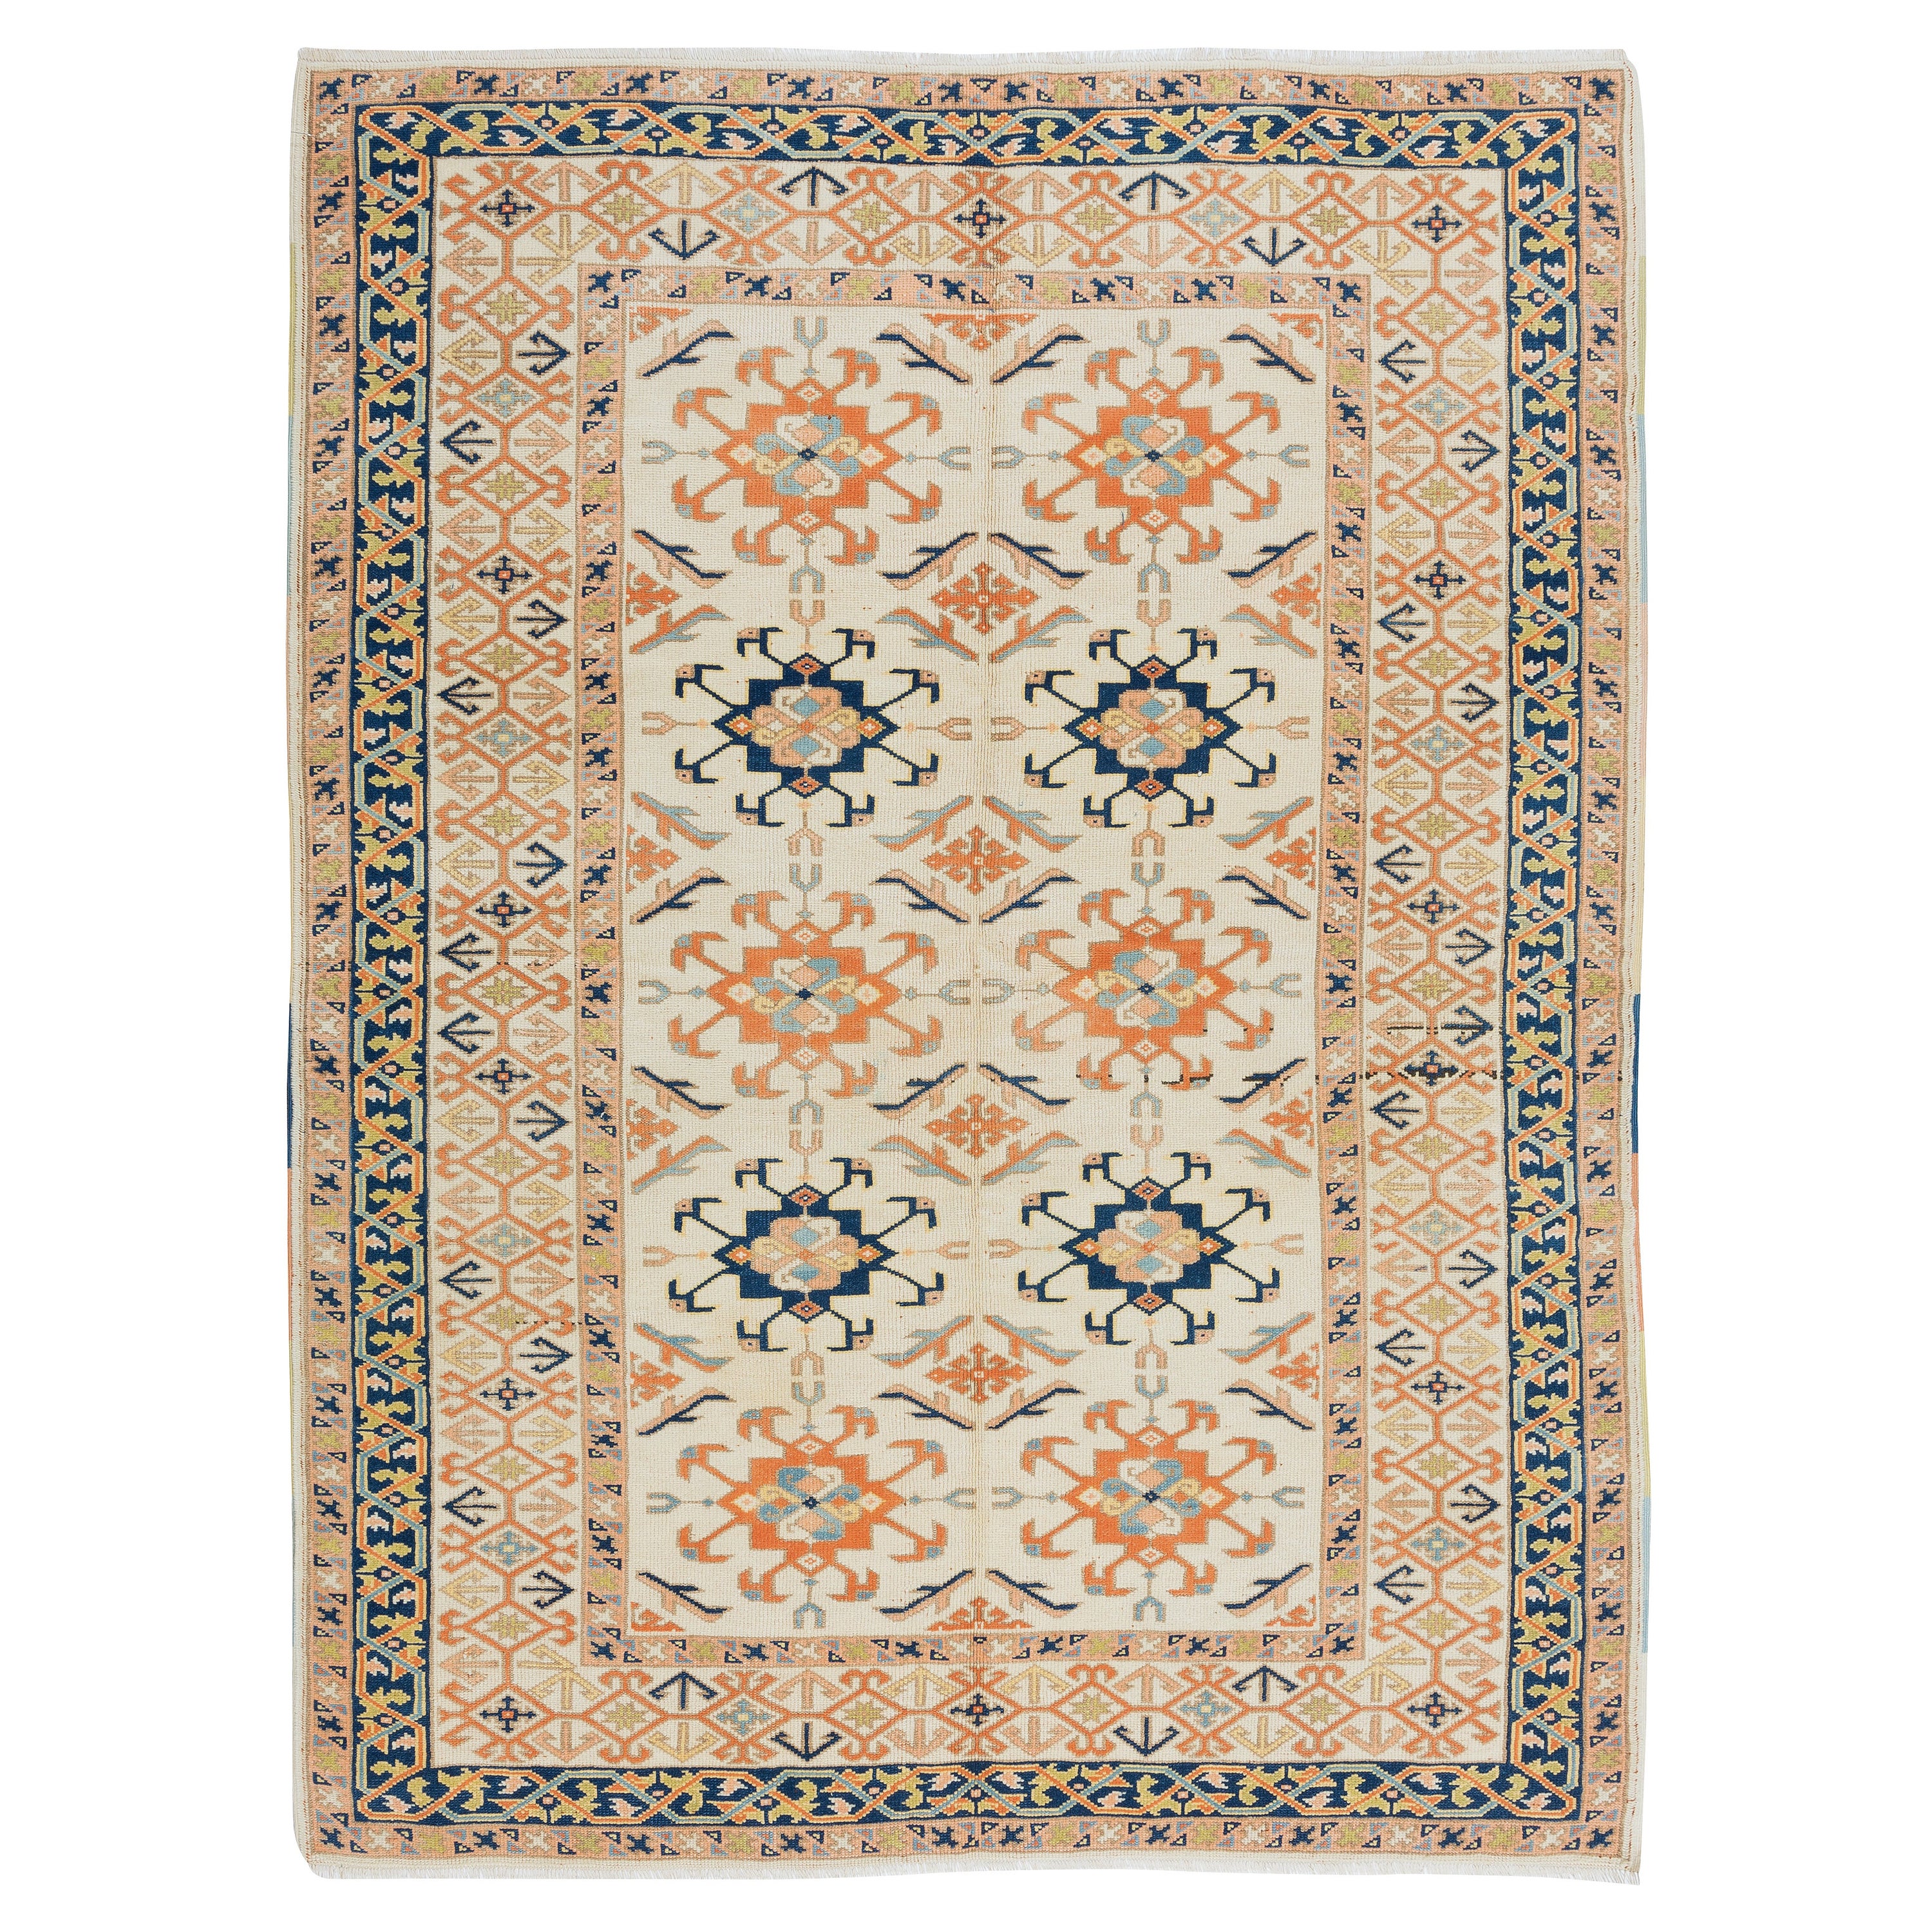 5.2x7 Ft Handmade Area Rug, Modern Turkish Carpet for Living Room, 100% Wool